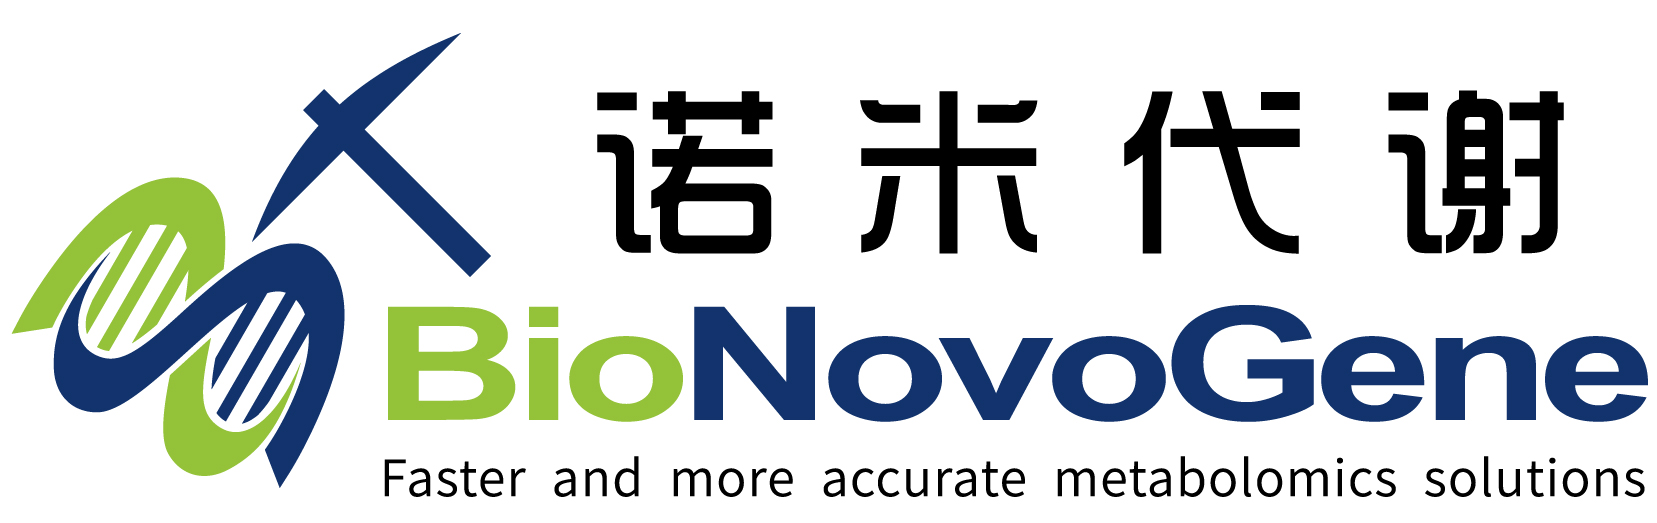 BioNovoGene Logo